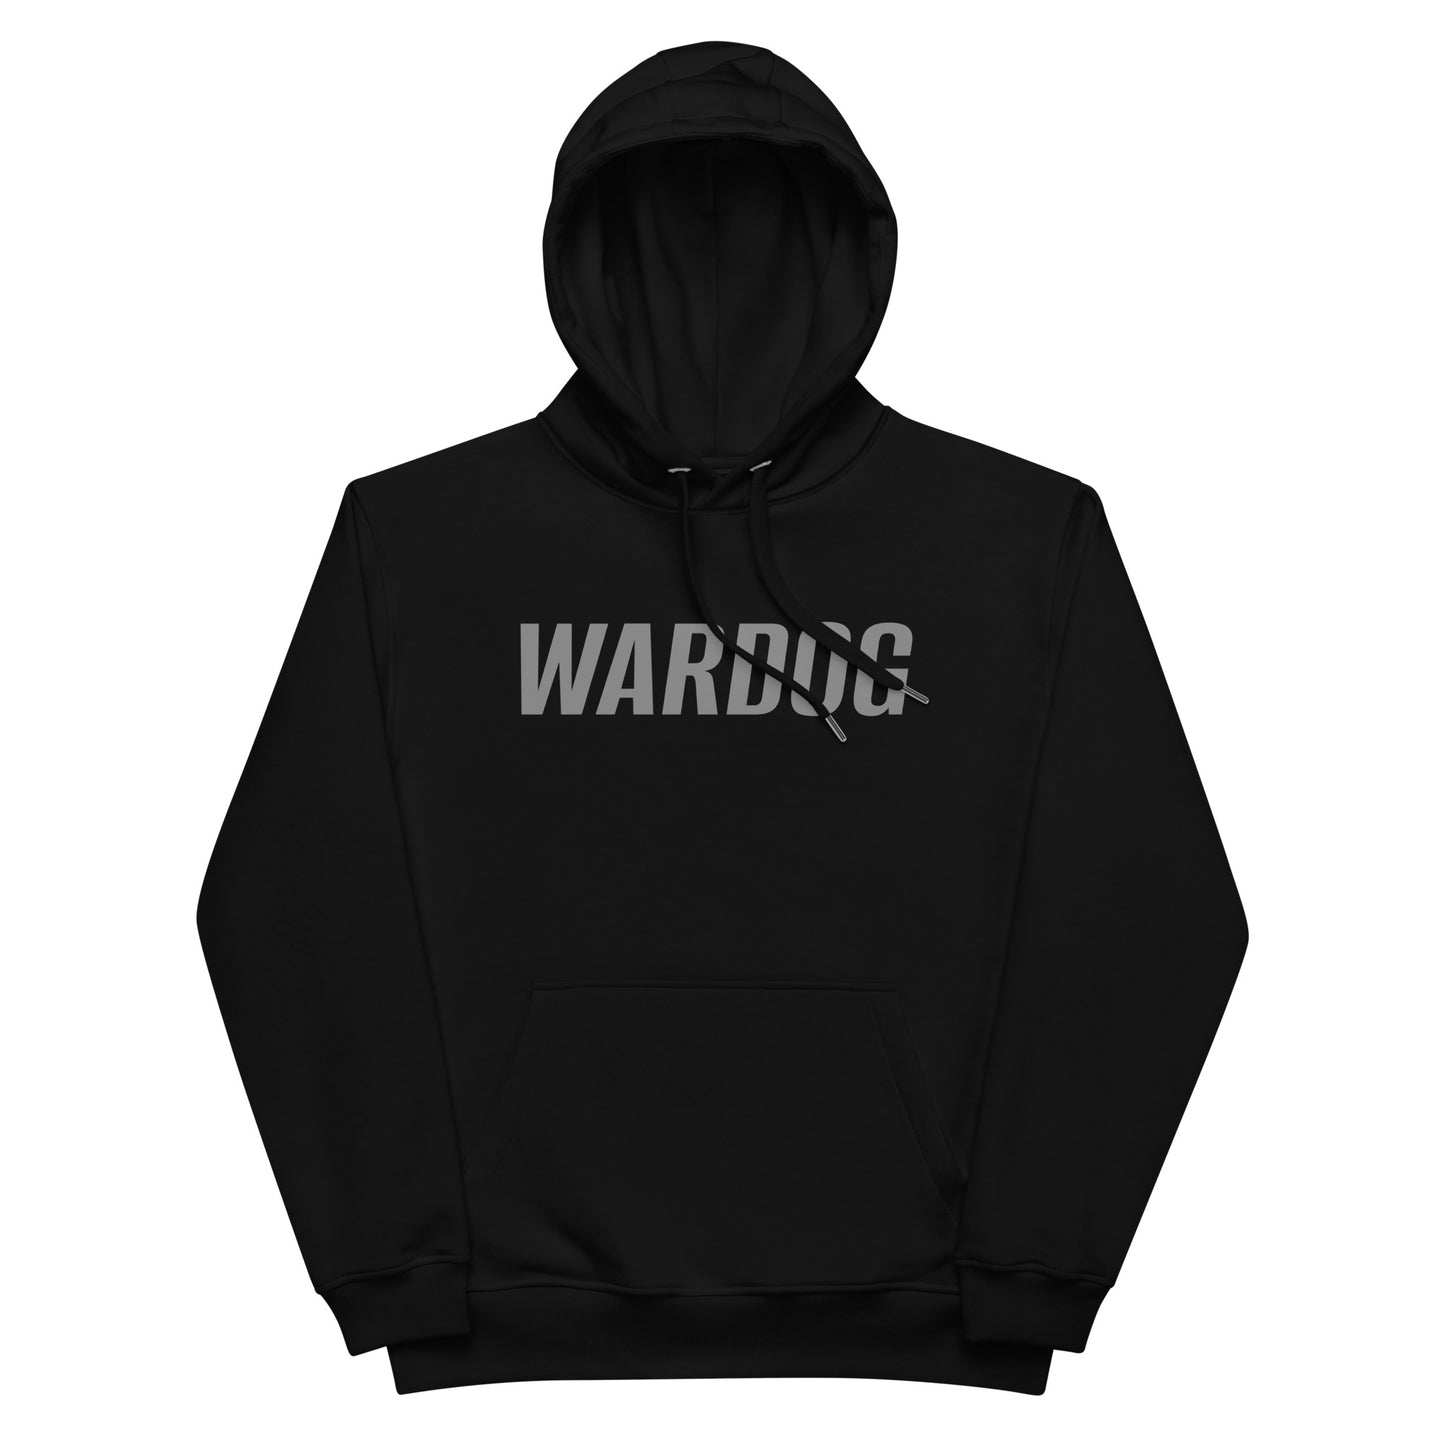 Premium eco wardog hoodie